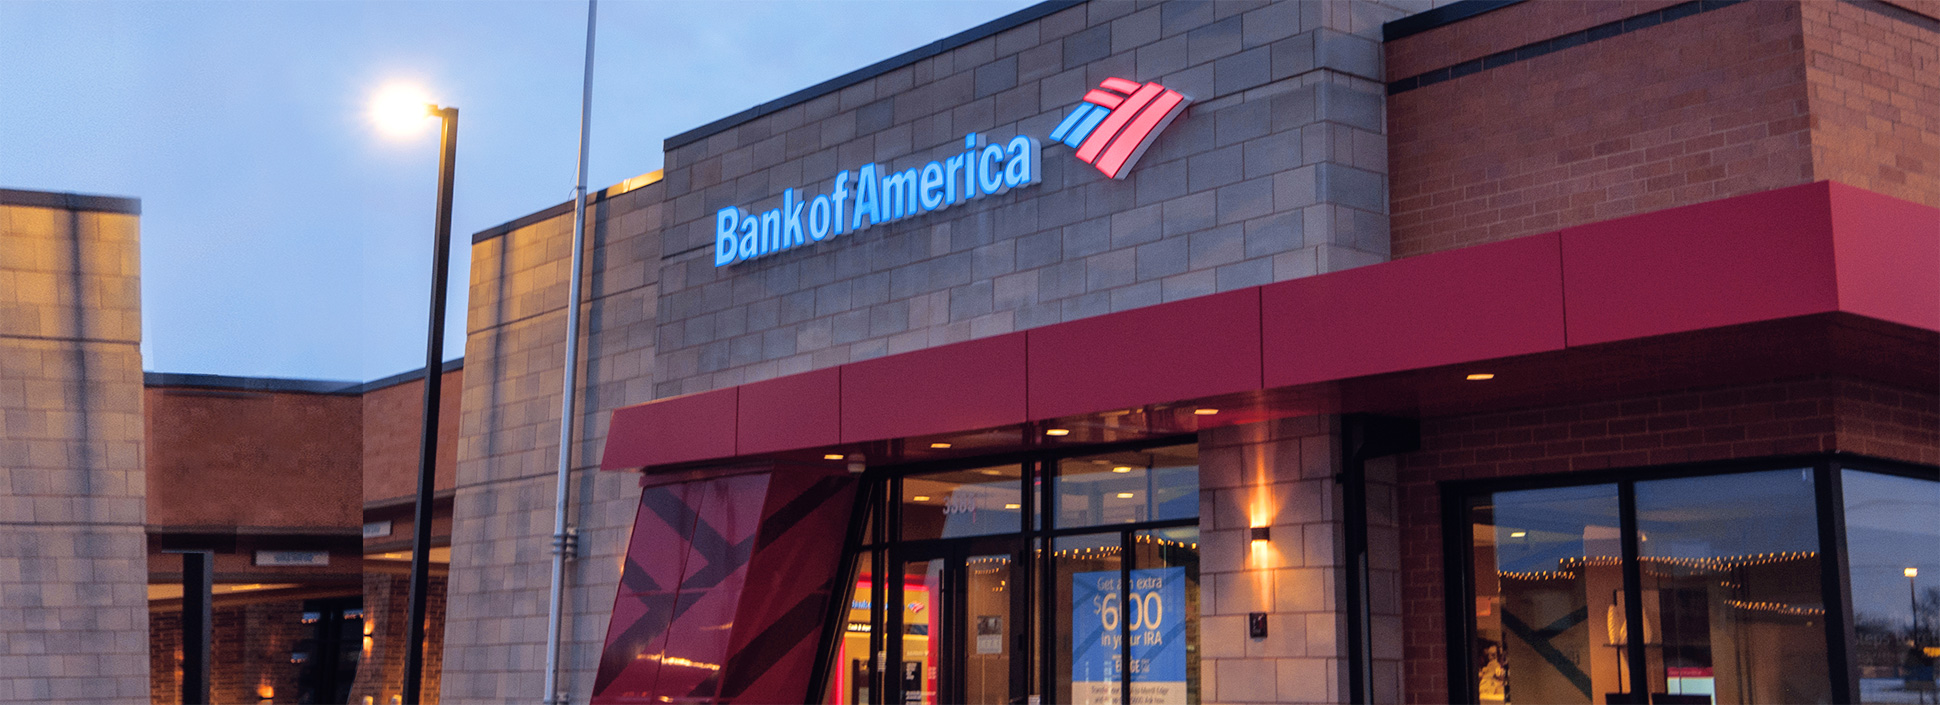 Bank of america near me